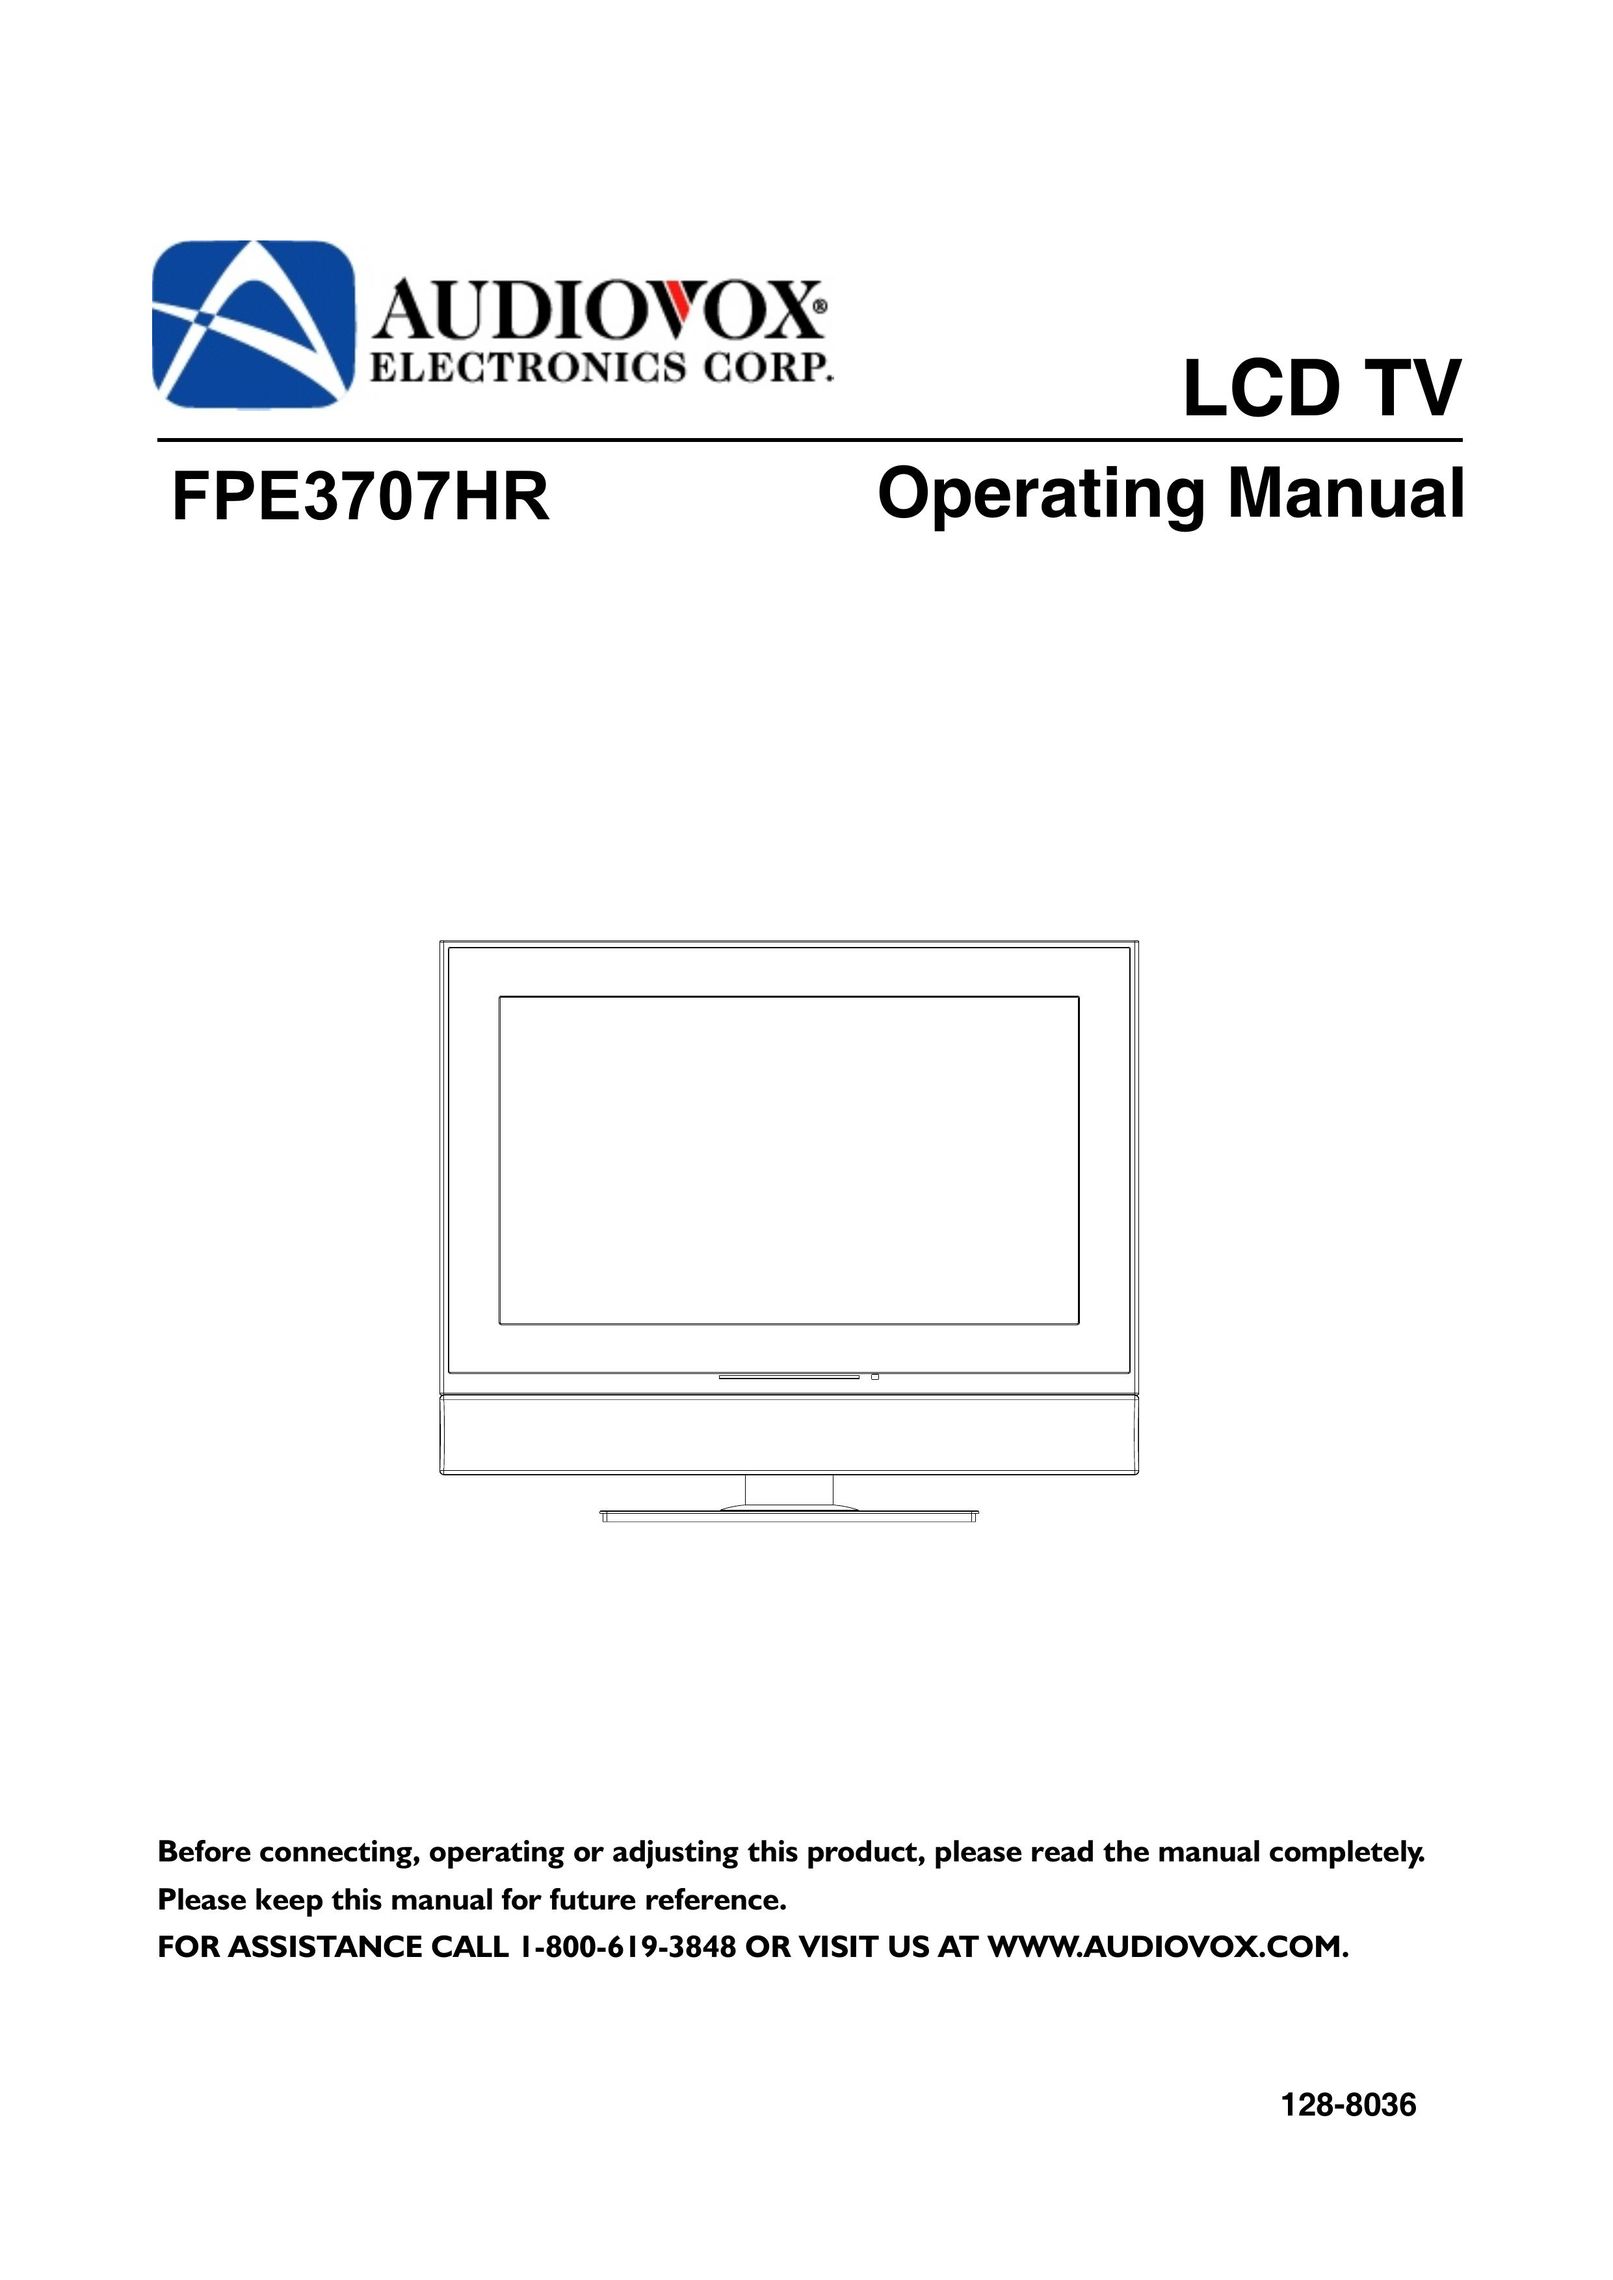 Audiovox FPE3707HR Flat Panel Television User Manual